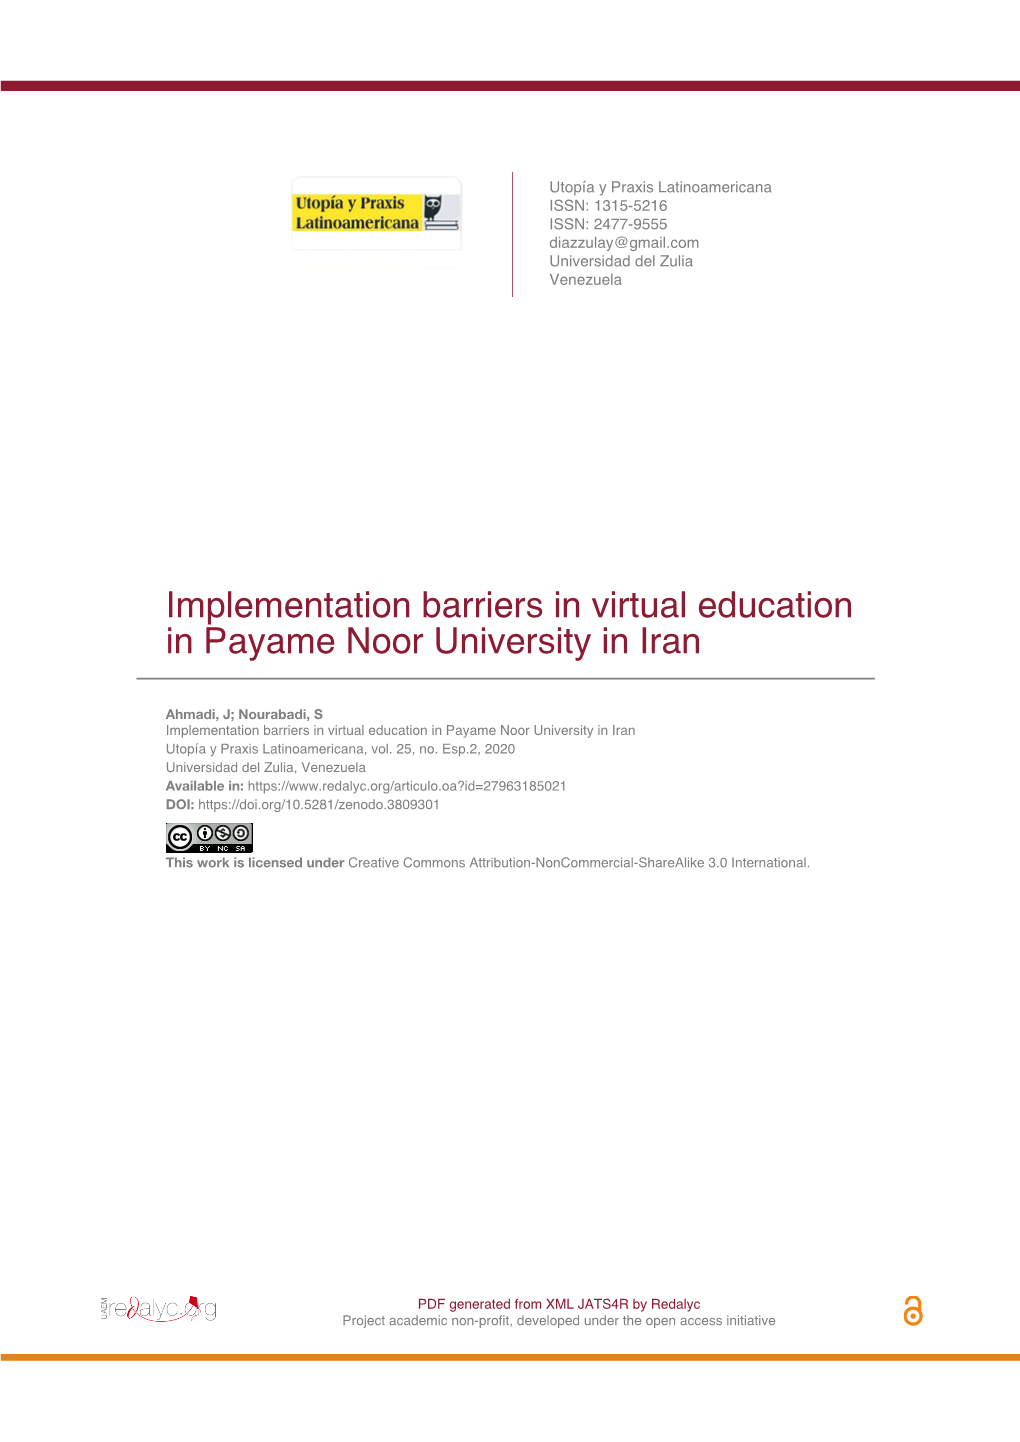 Implementation Barriers in Virtual Education in Payame Noor University in Iran